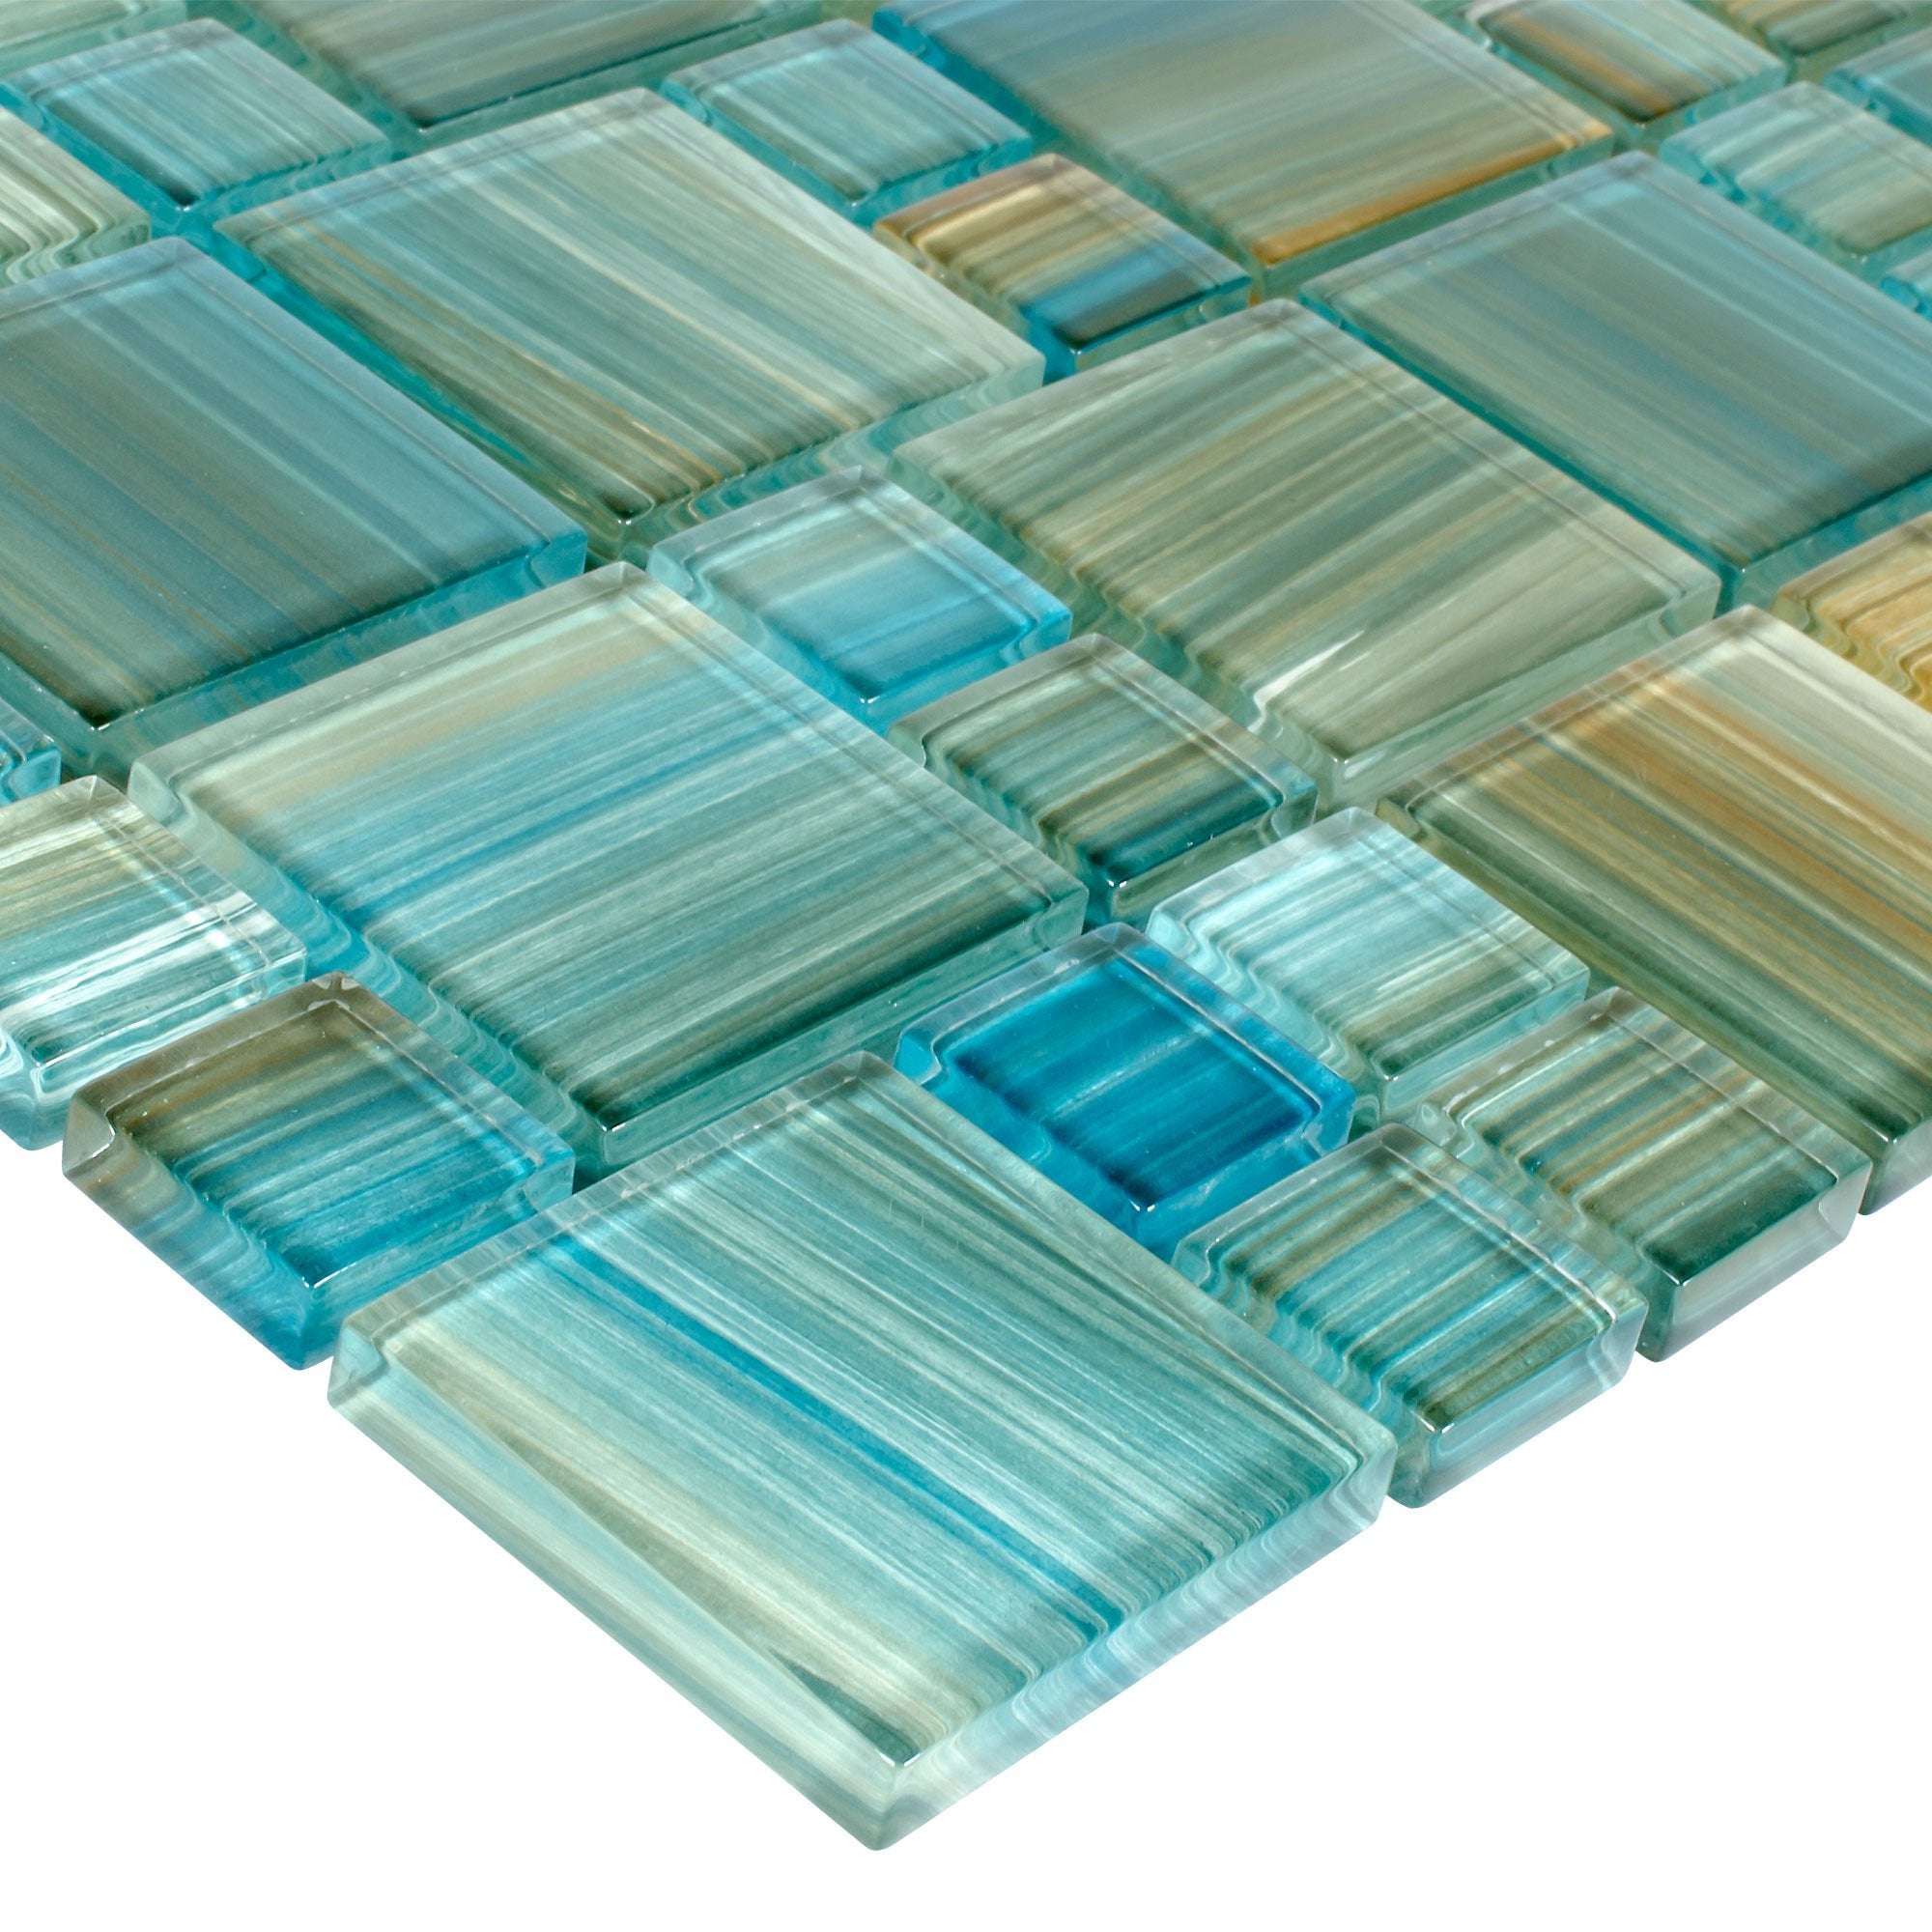 Anti-Viral, Self-Cleaning Glass Tile is Here! – AquaBlu Mosaics